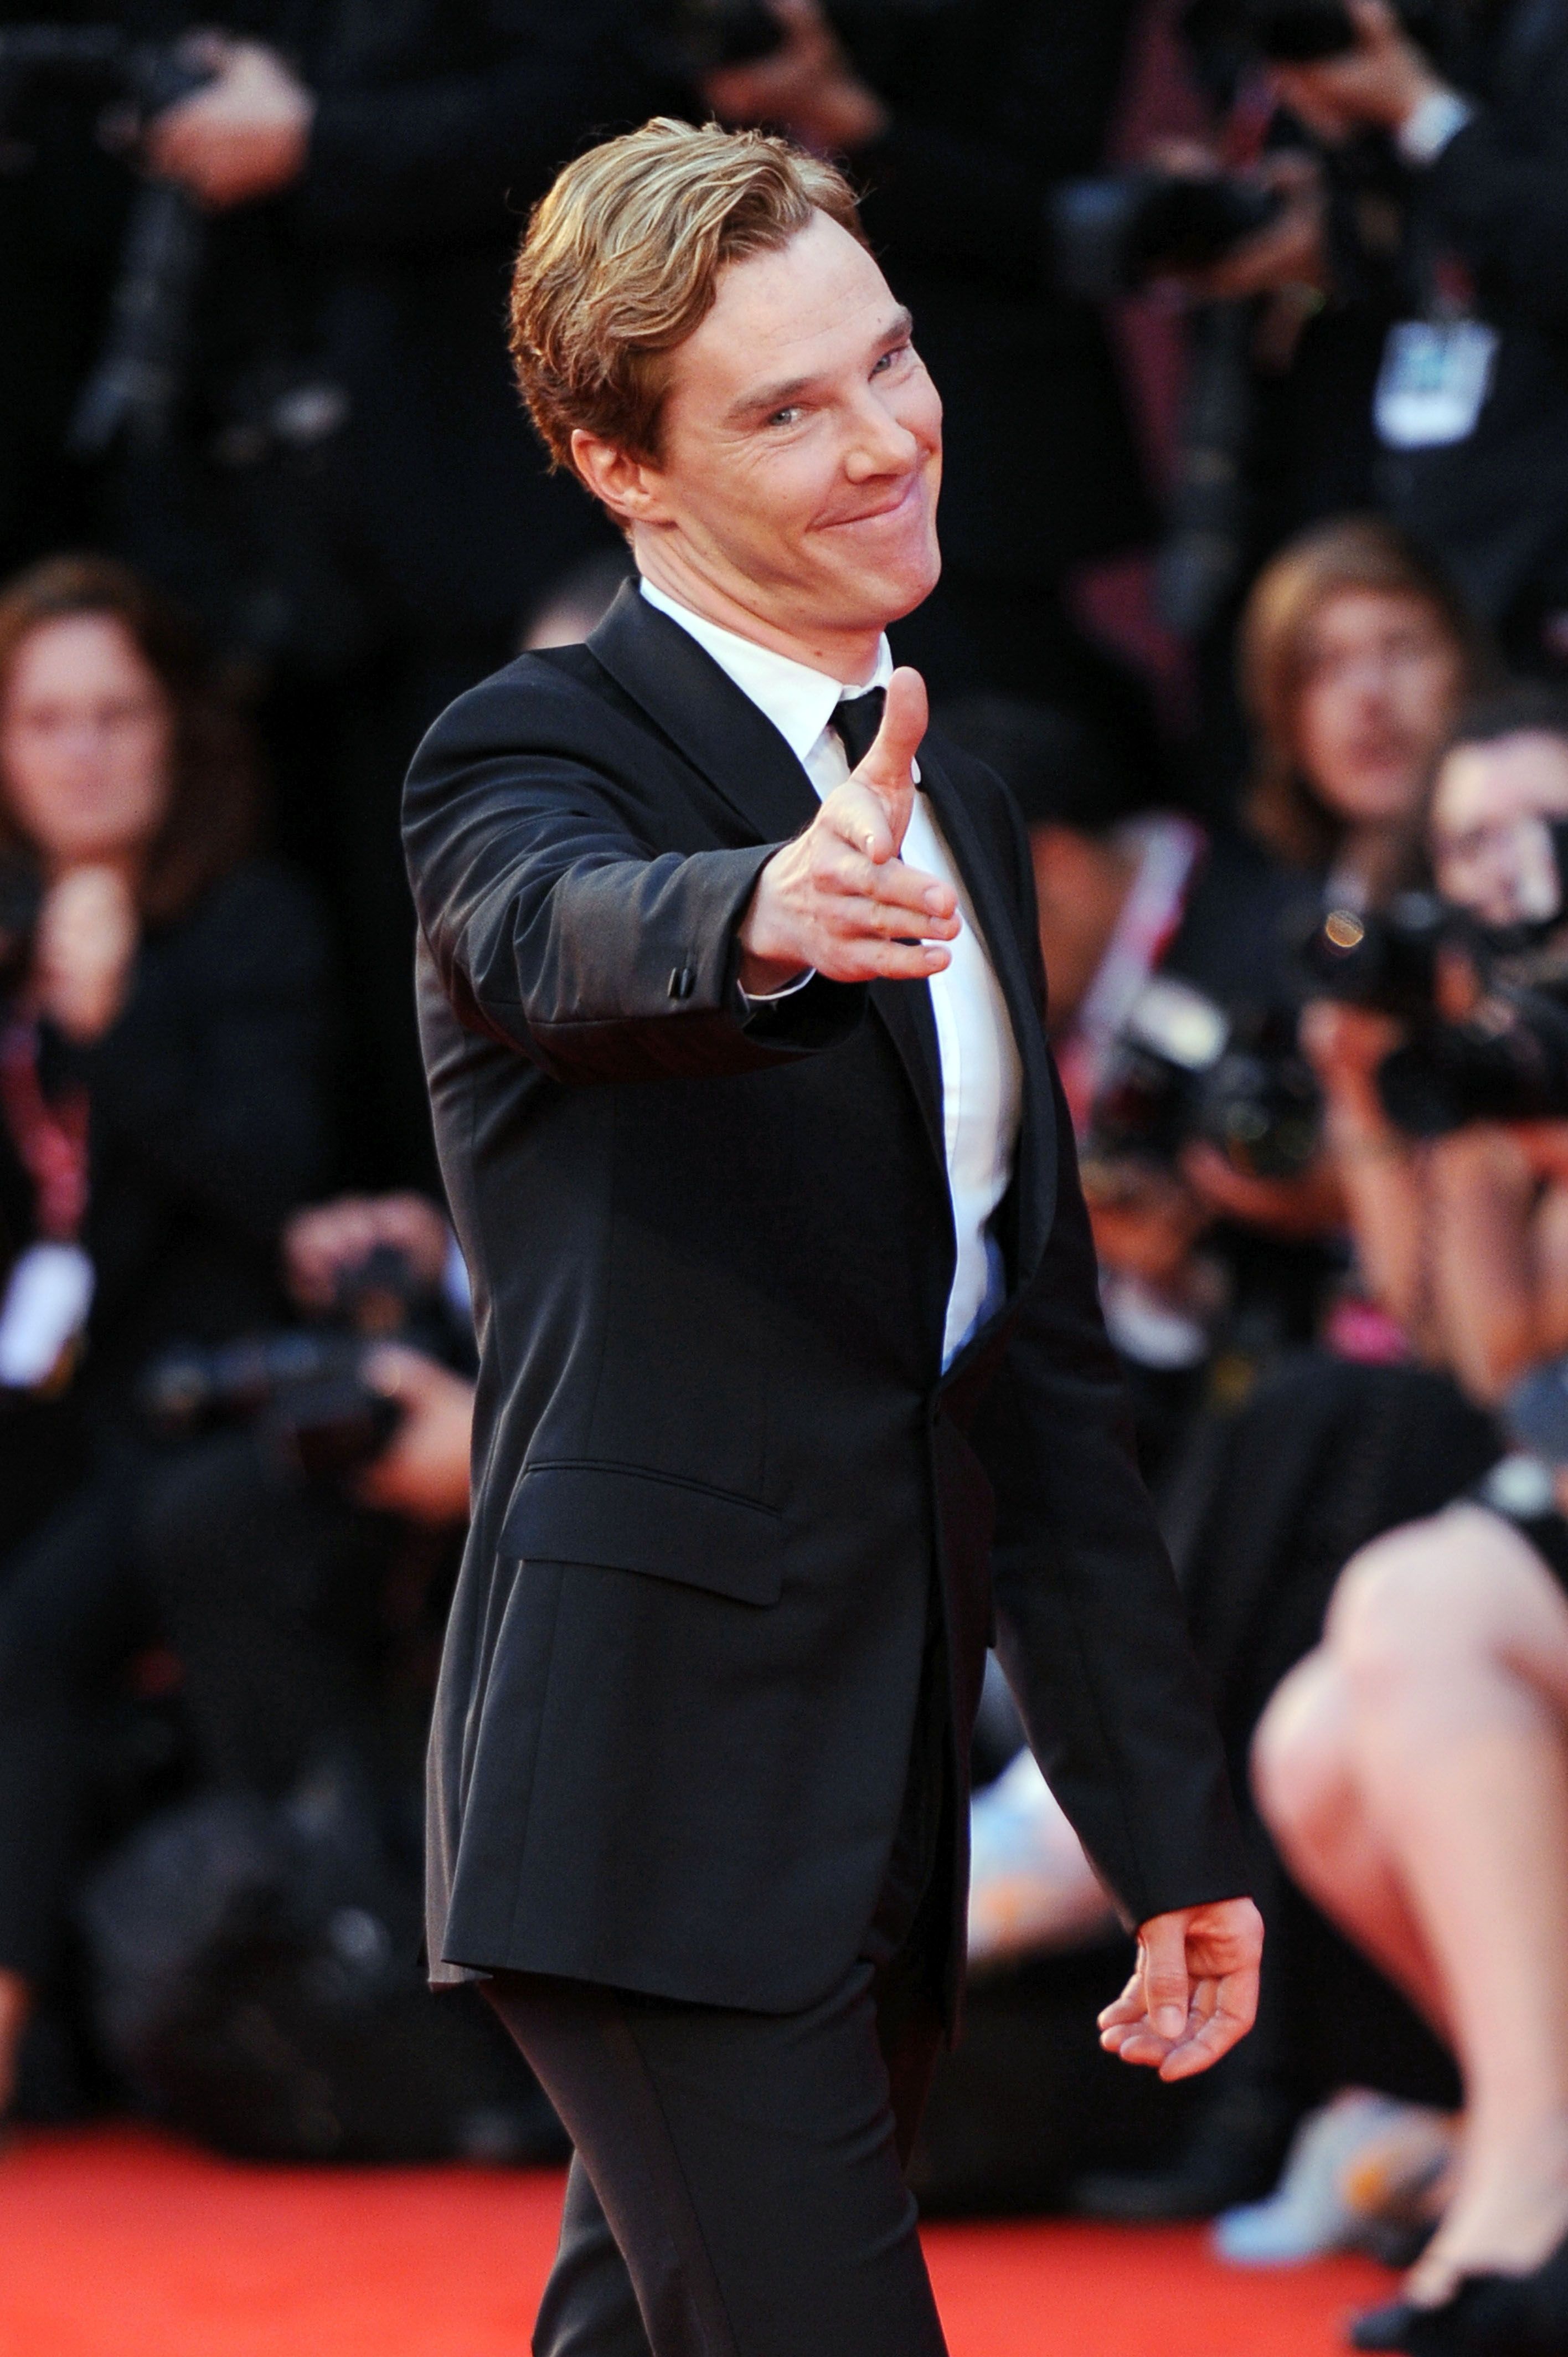 Benedict Cumberbatch doctor sleep ewan mcgregor capelli rossi hair red beauty cinema star